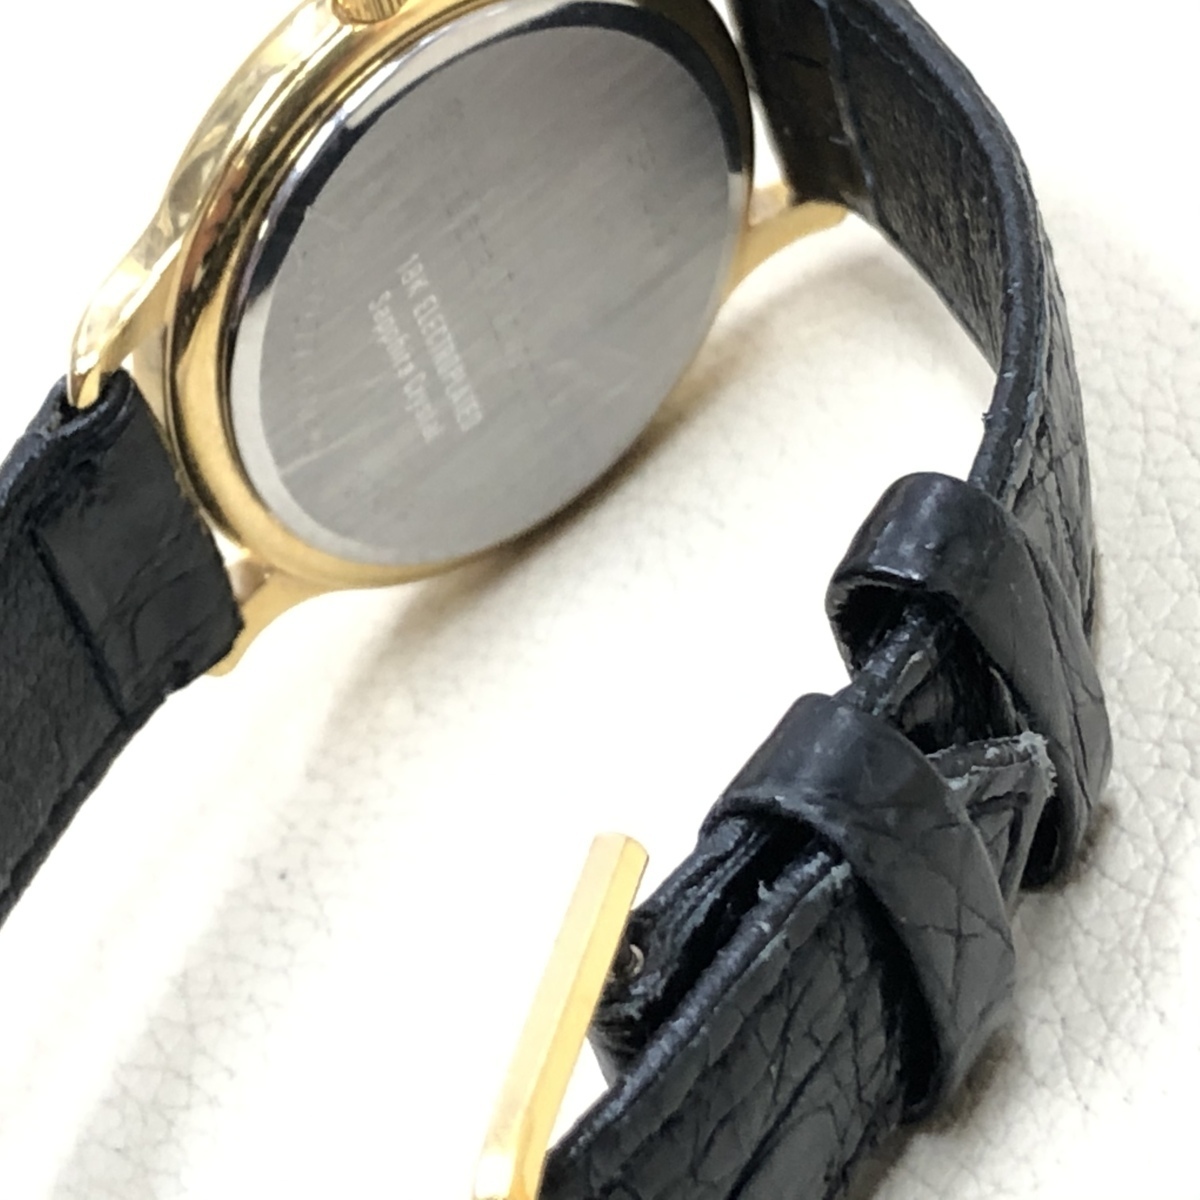 *[ подлинный товар ]HELENA RUBINSTEIN Helena Rubinstein HR1046 18K кварц женский / boys наручные часы Gold кожаный ремень батарейка новый товар /T100